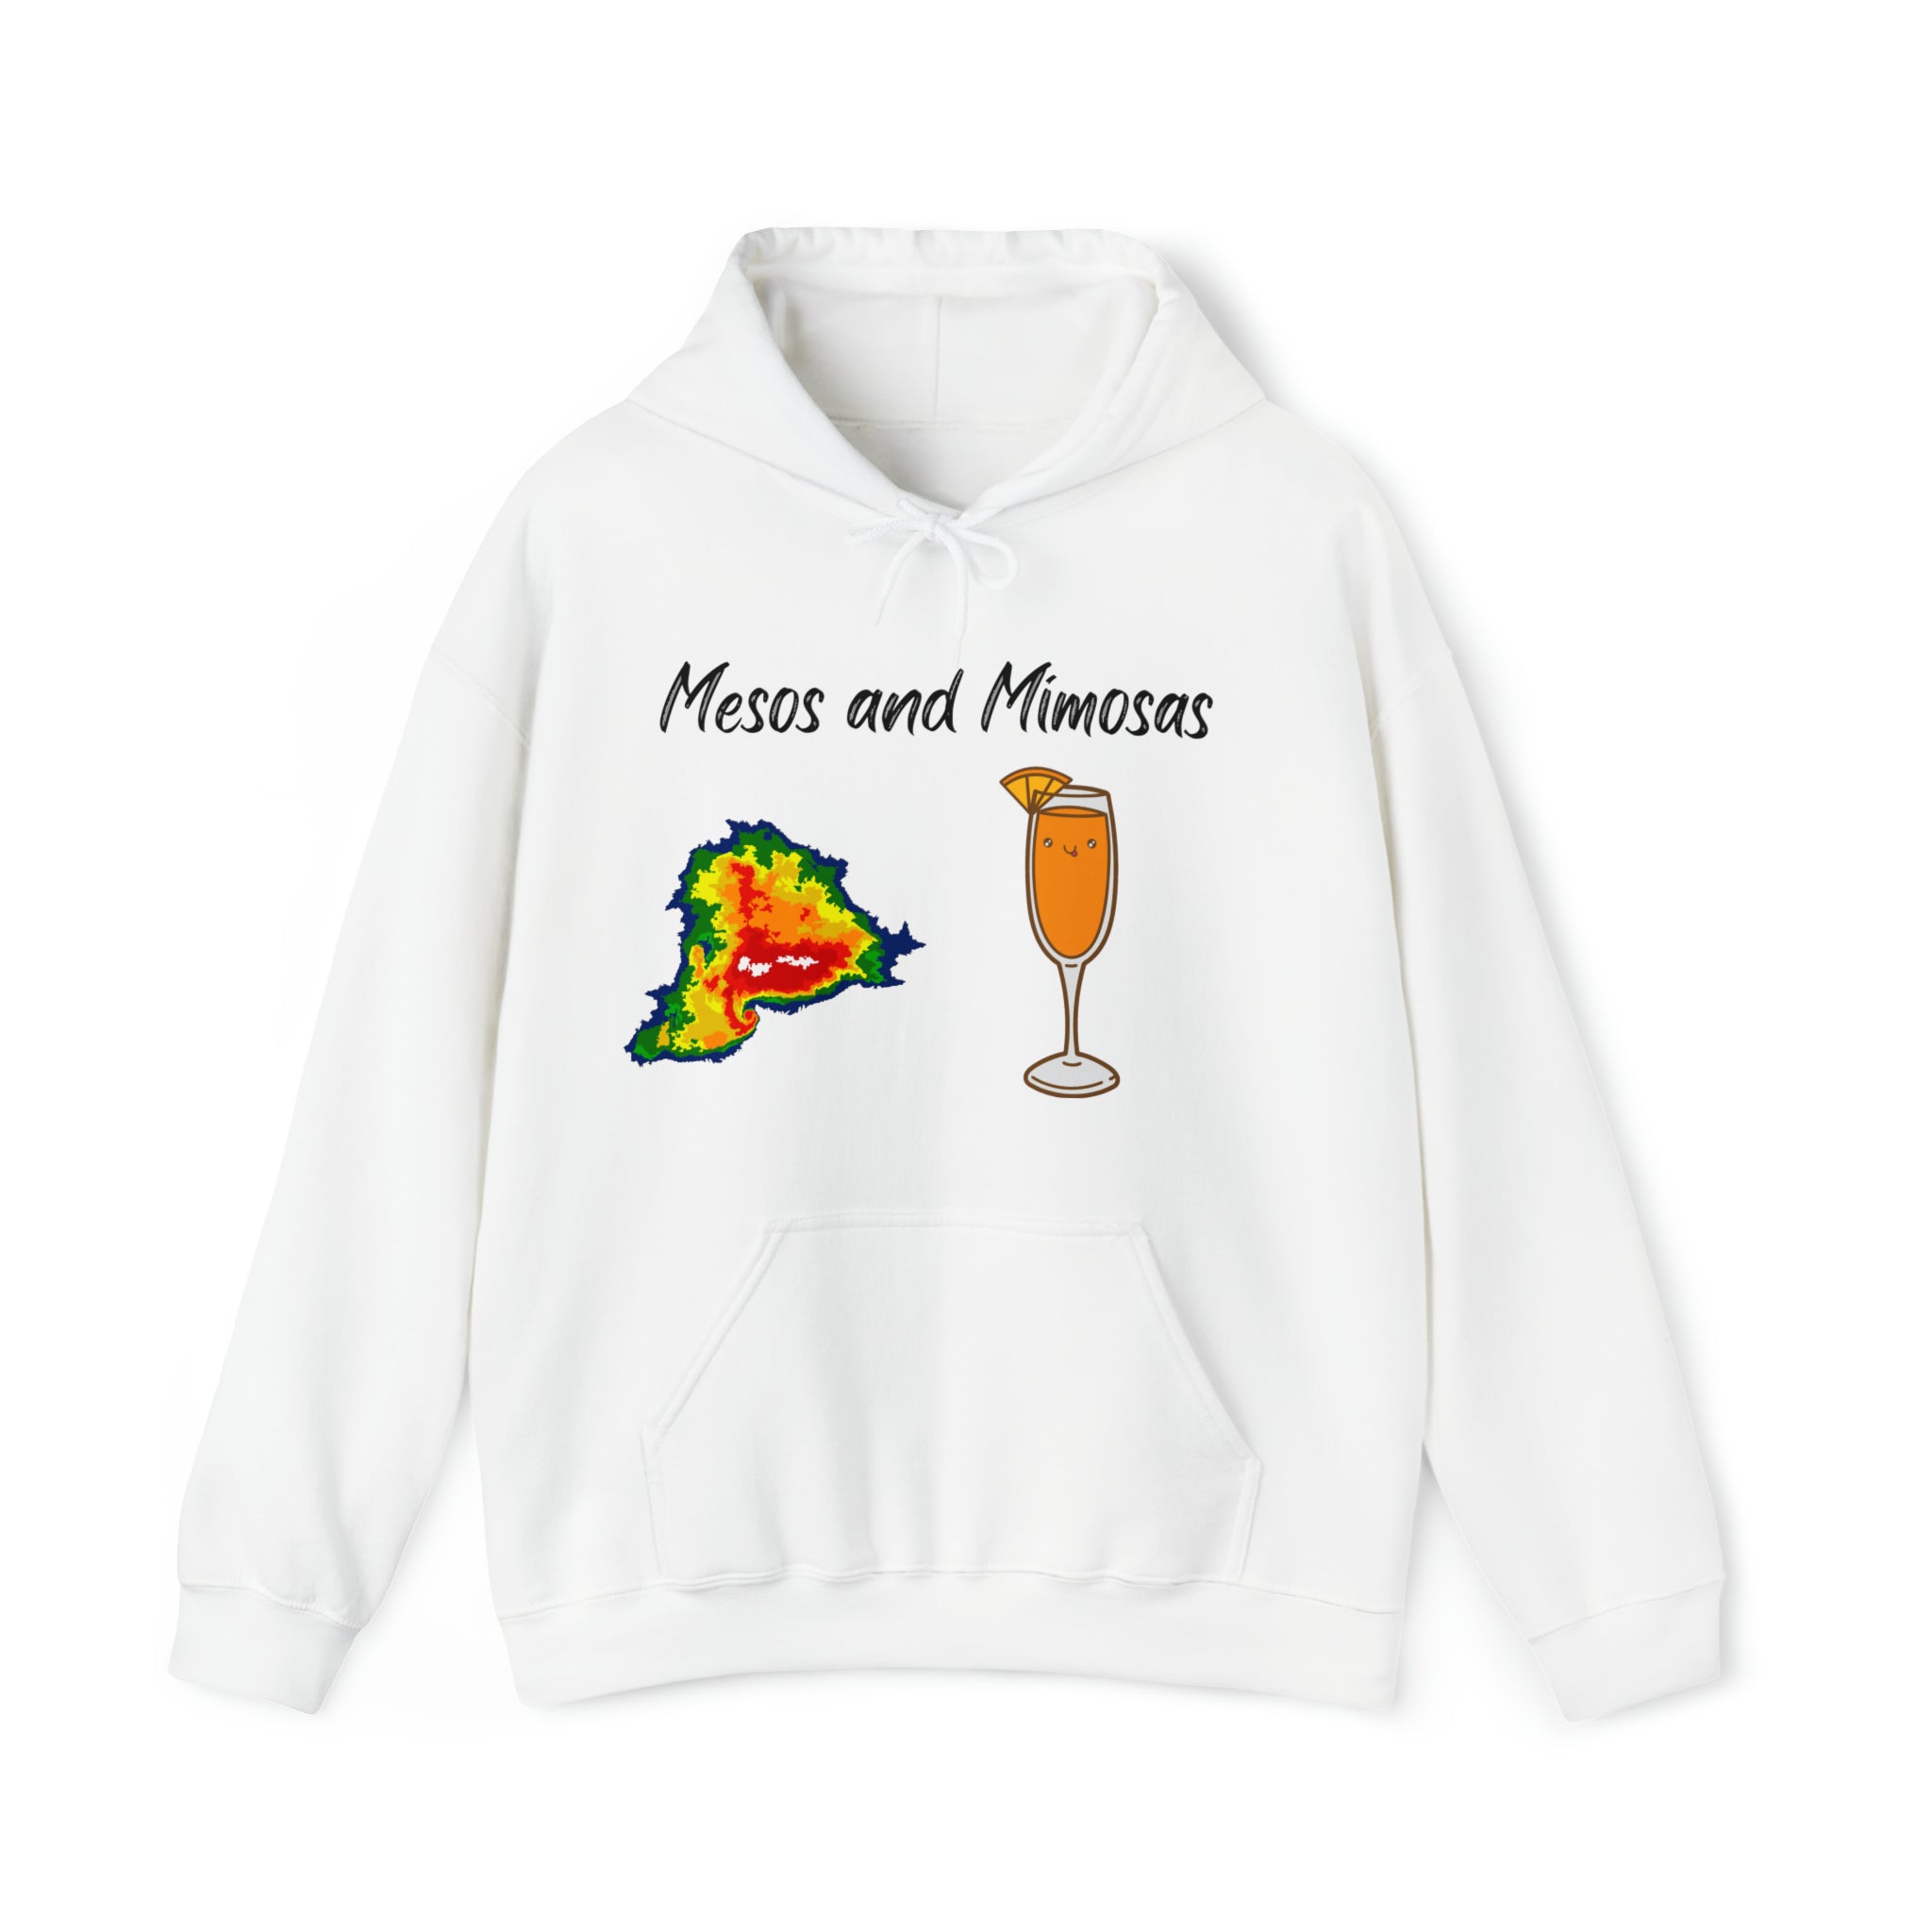 Mesos and Mimosas Hoodie 